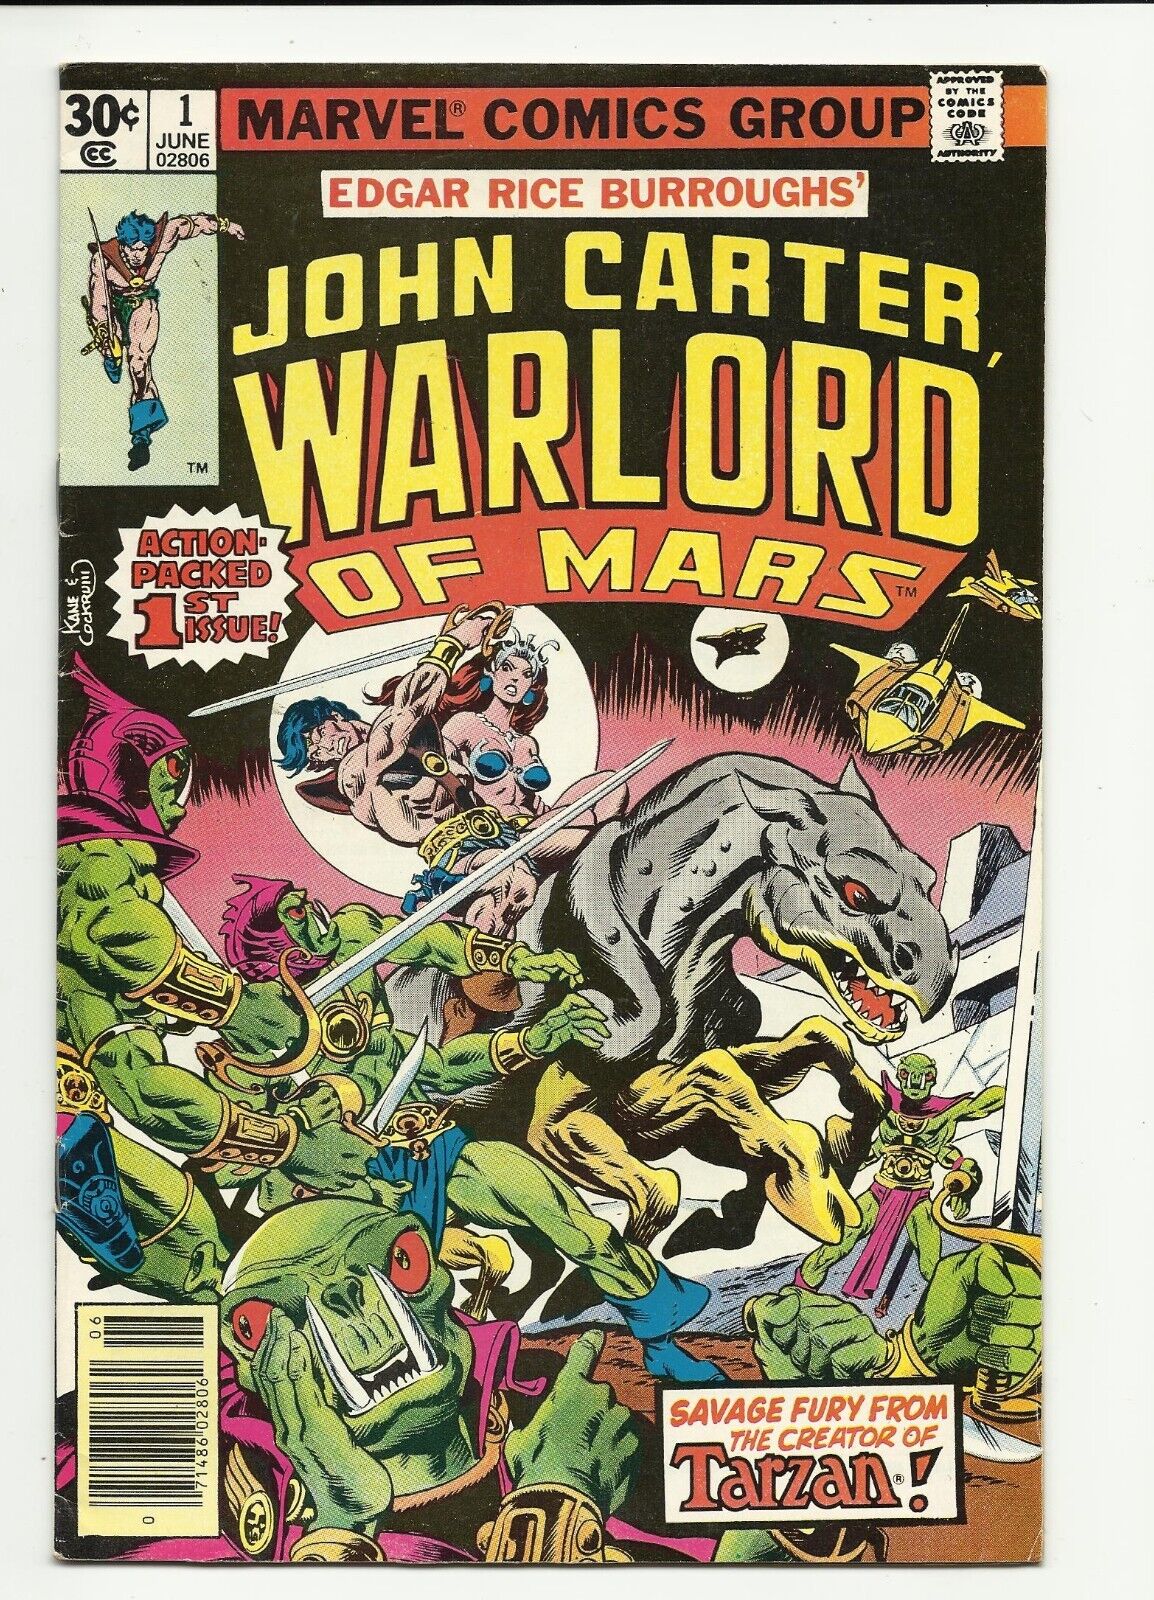 John Carter, Warlord of Mars #1 - Marvel series - Bronze Age - VG/FN 5.0